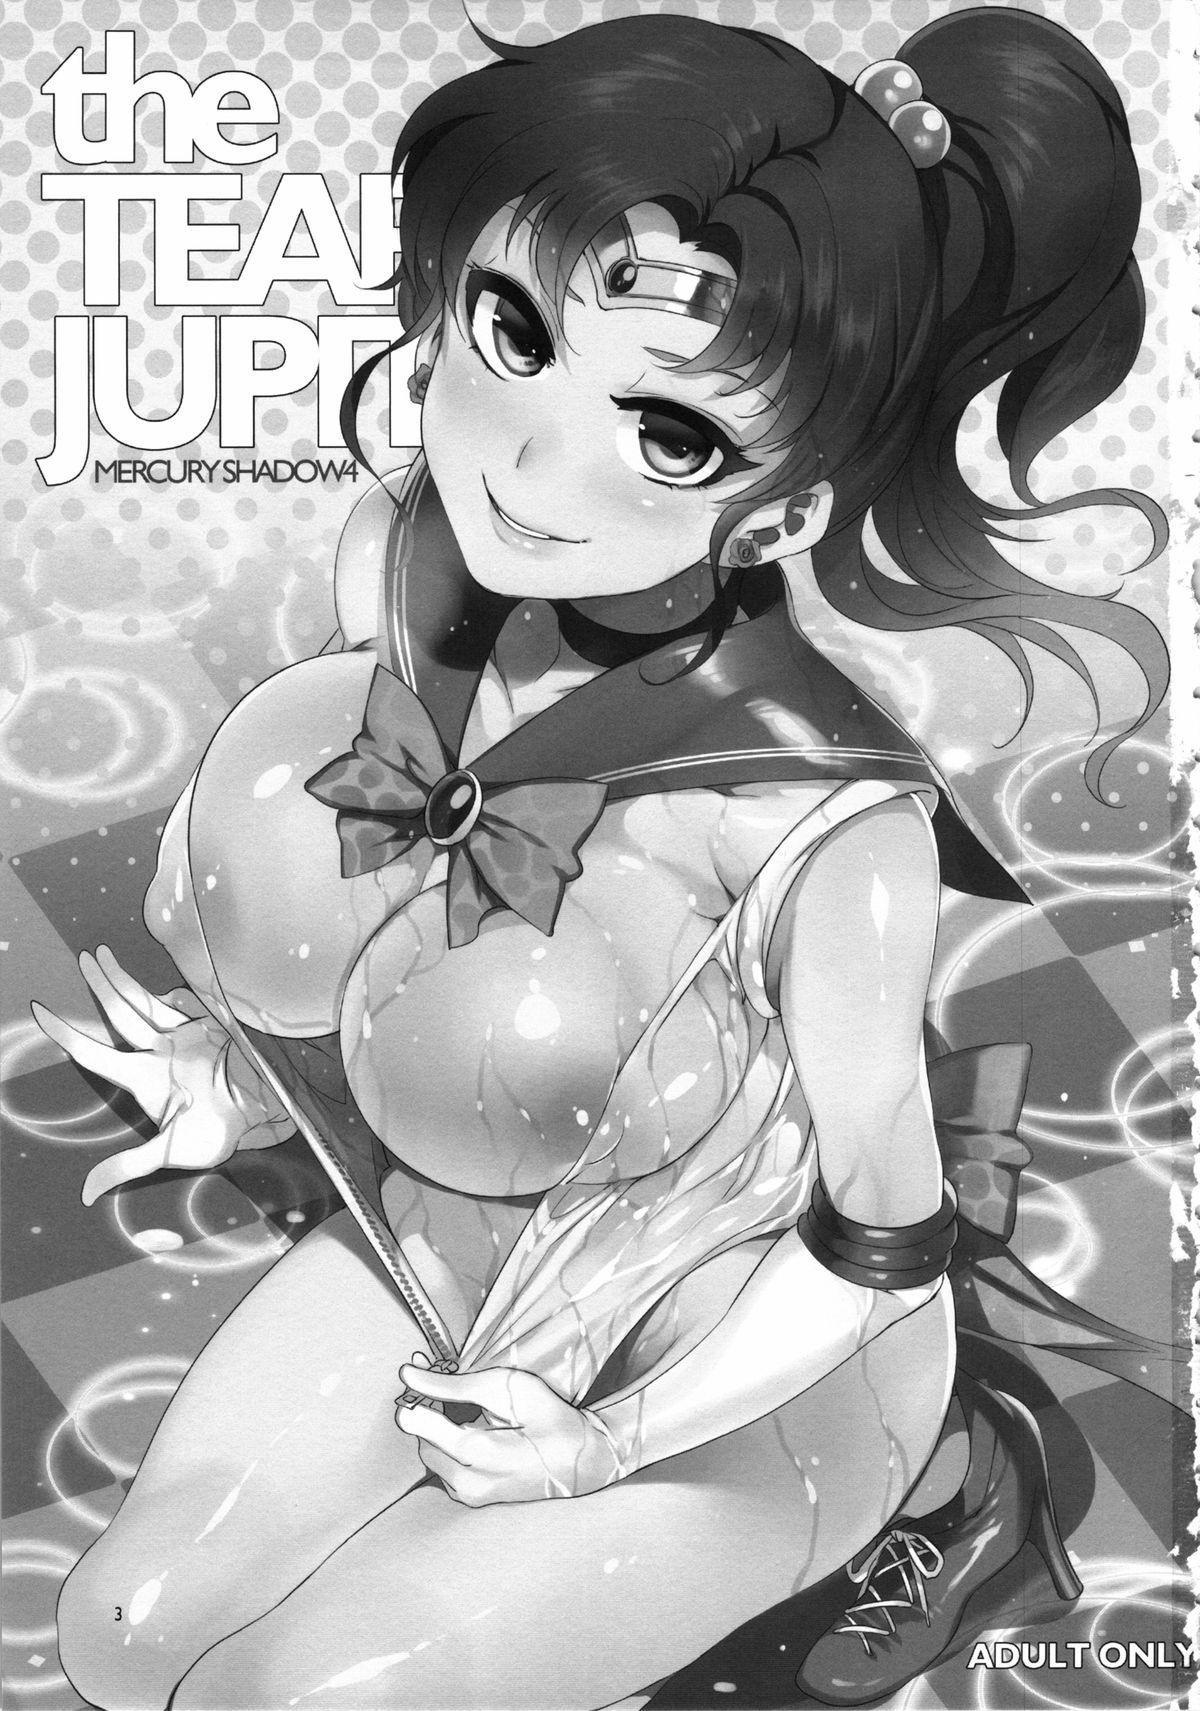 Titten the TEARS of JUPITER: MERCURY SHADOW 4 - Sailor moon Pornstar - Page 3